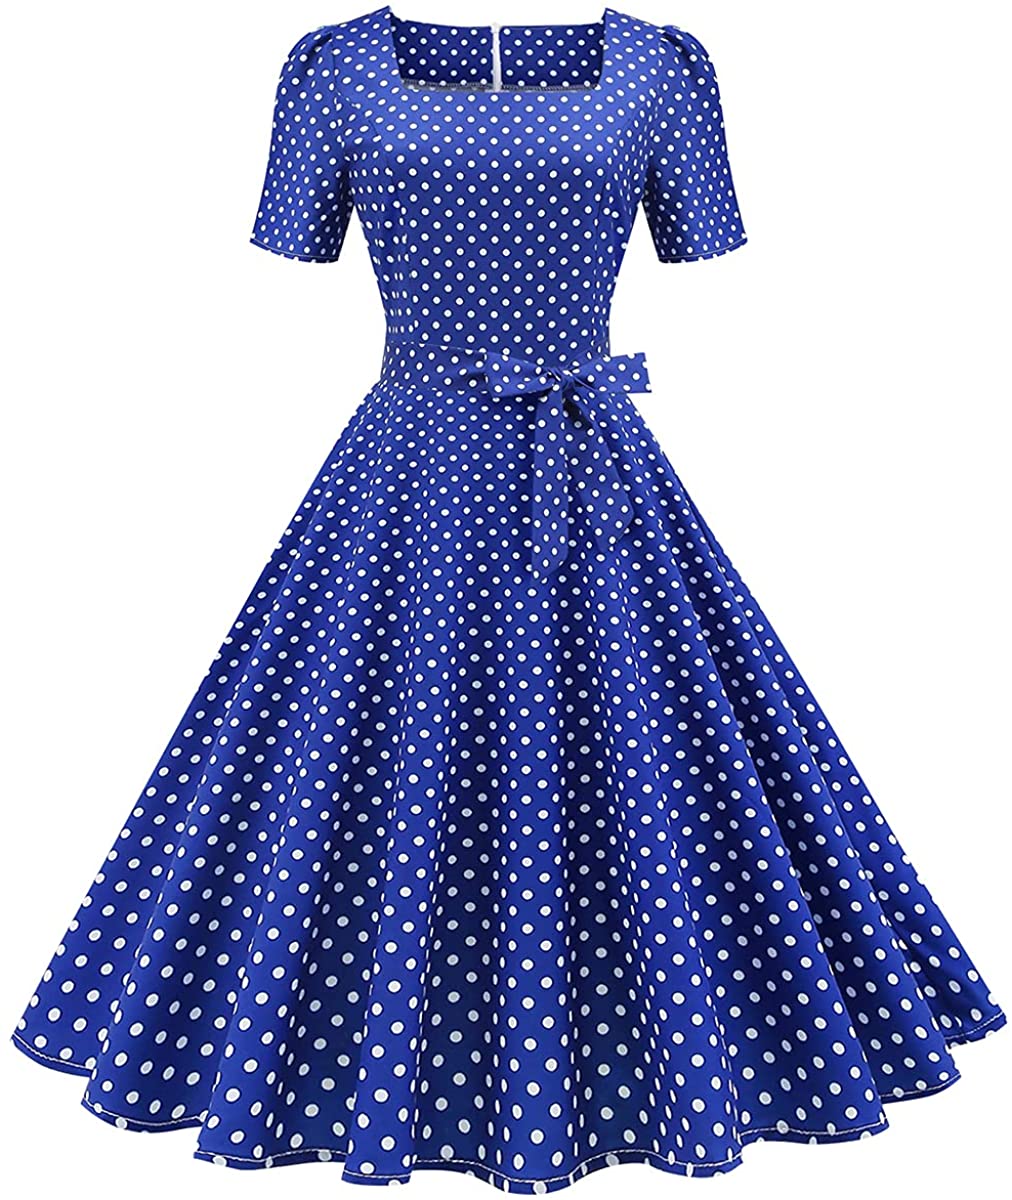 Women Vintage 50s 1950s Dress Square Neck A-line Polka Dot